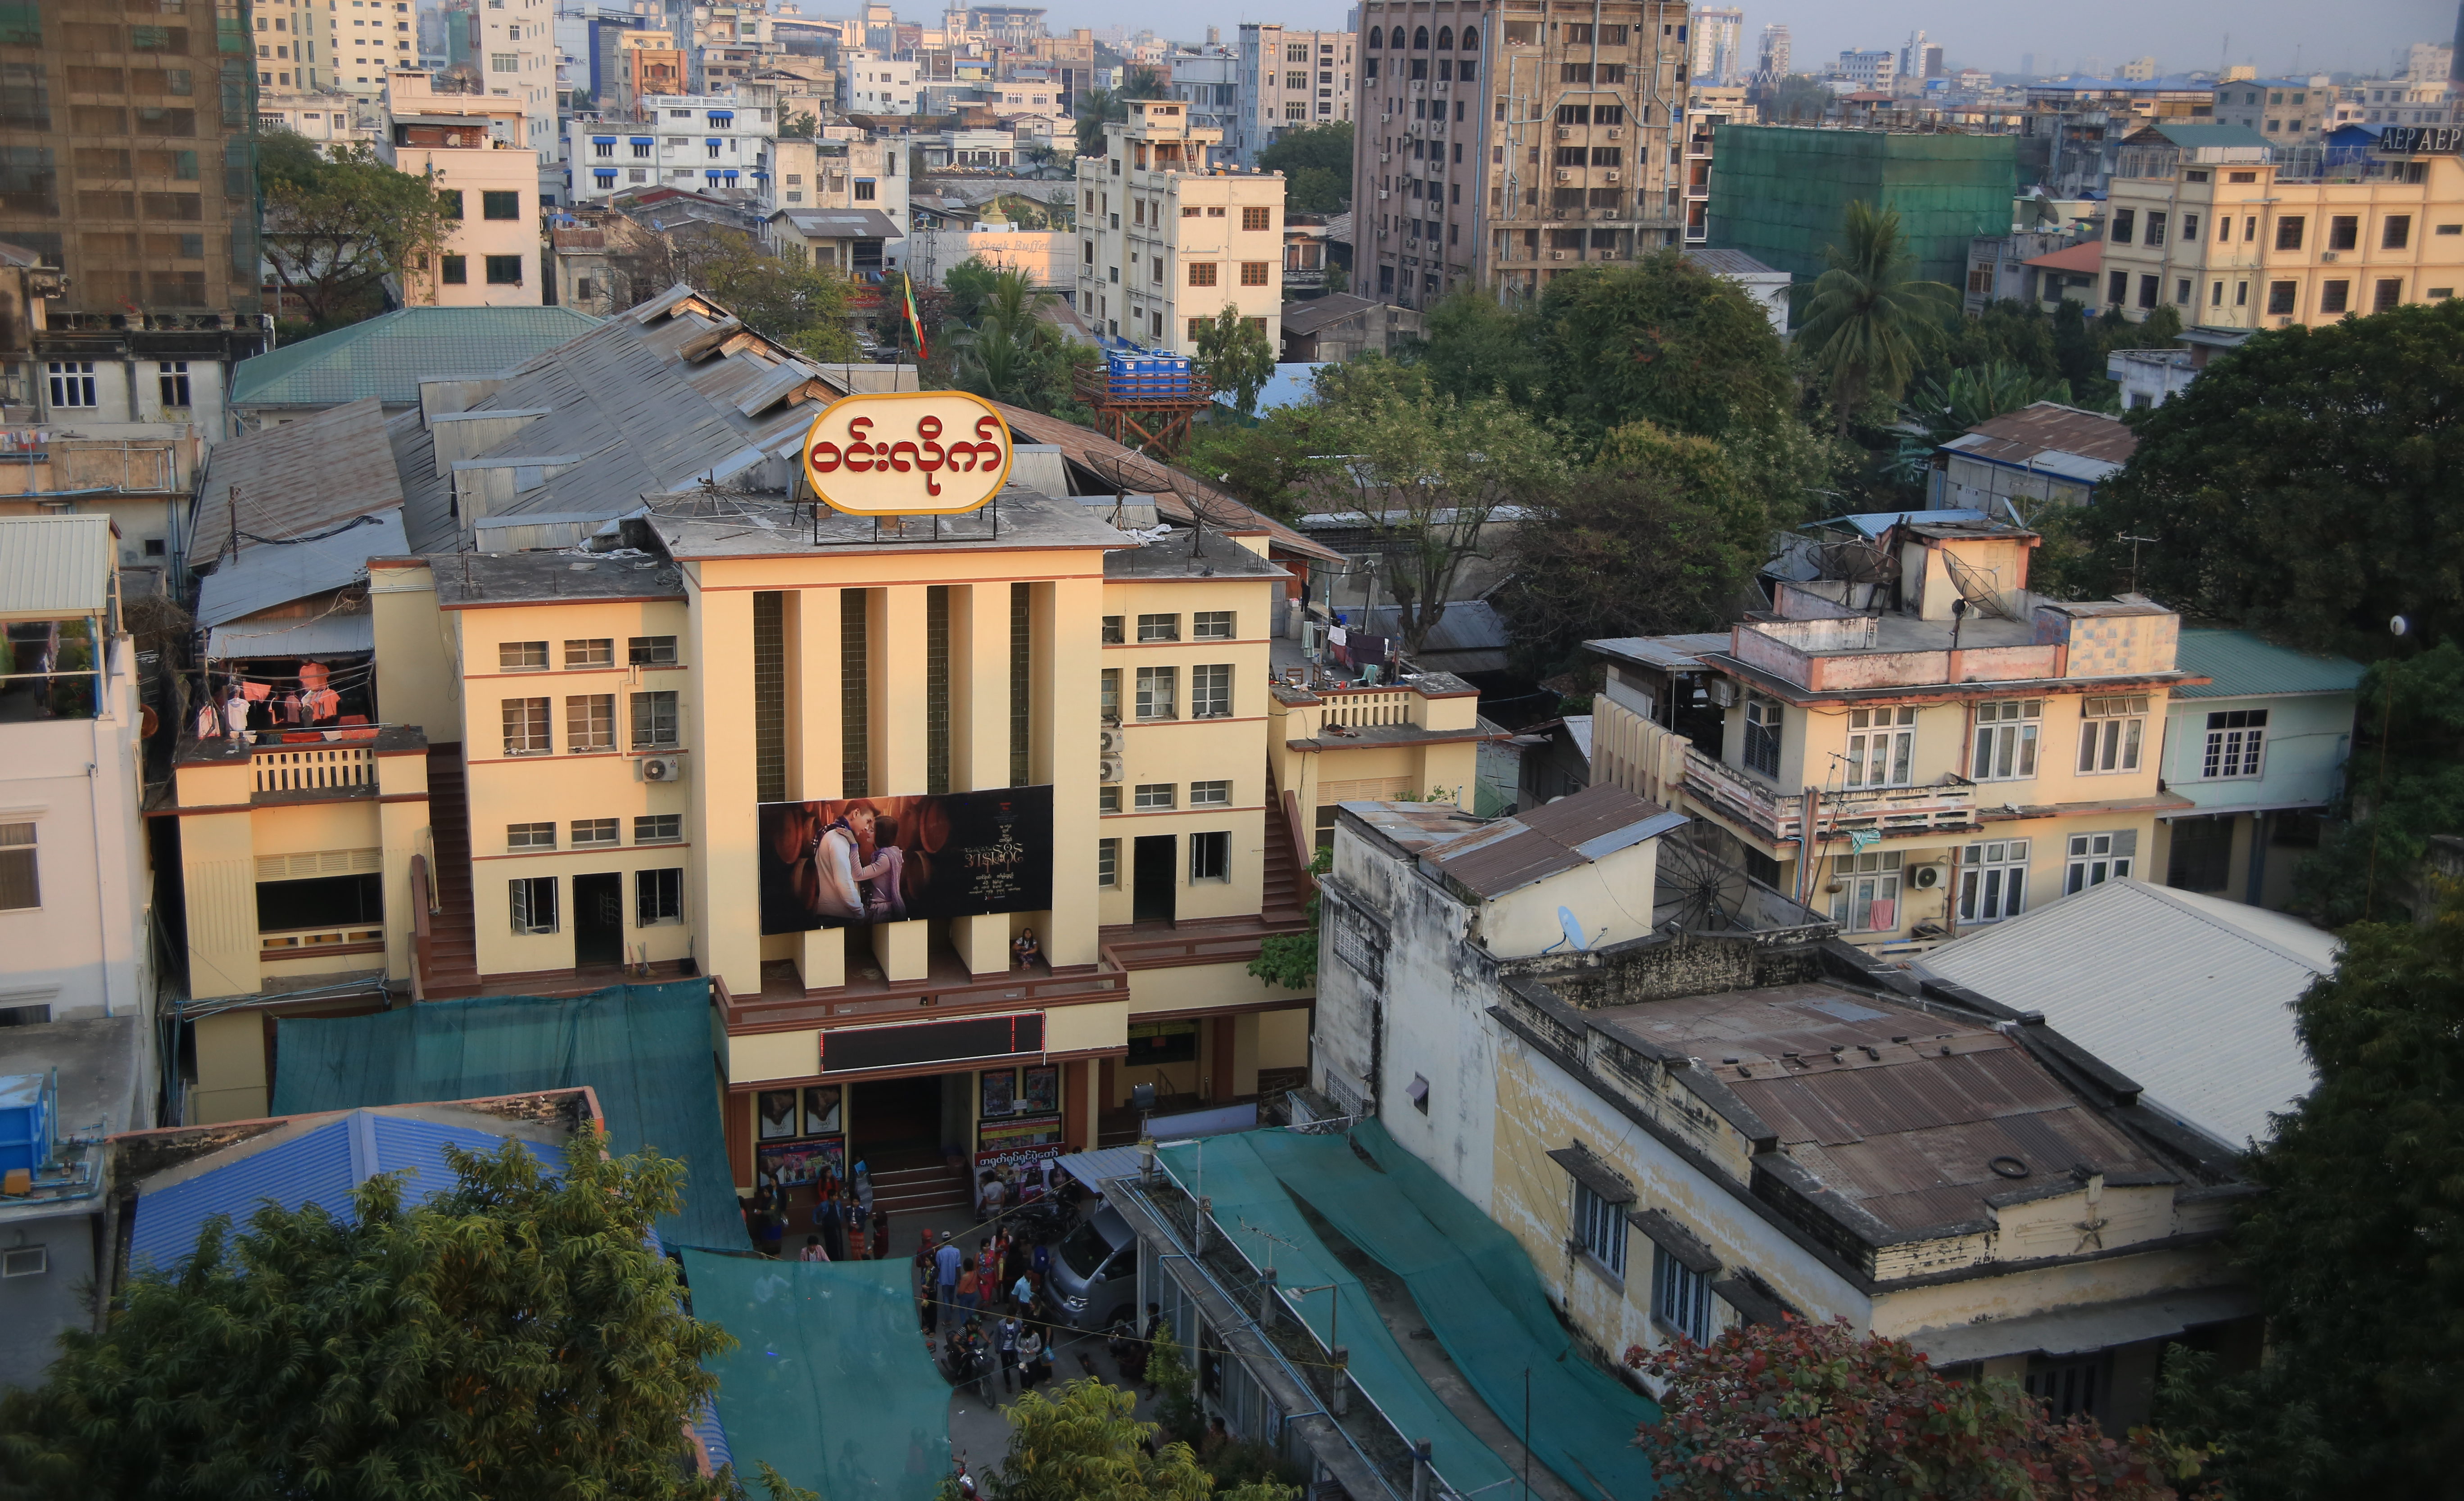 Win Lite Cinema, built in 1958, is Mingalar Cinemas’ flagship location in Mandalay. Photo: Phil Jablon